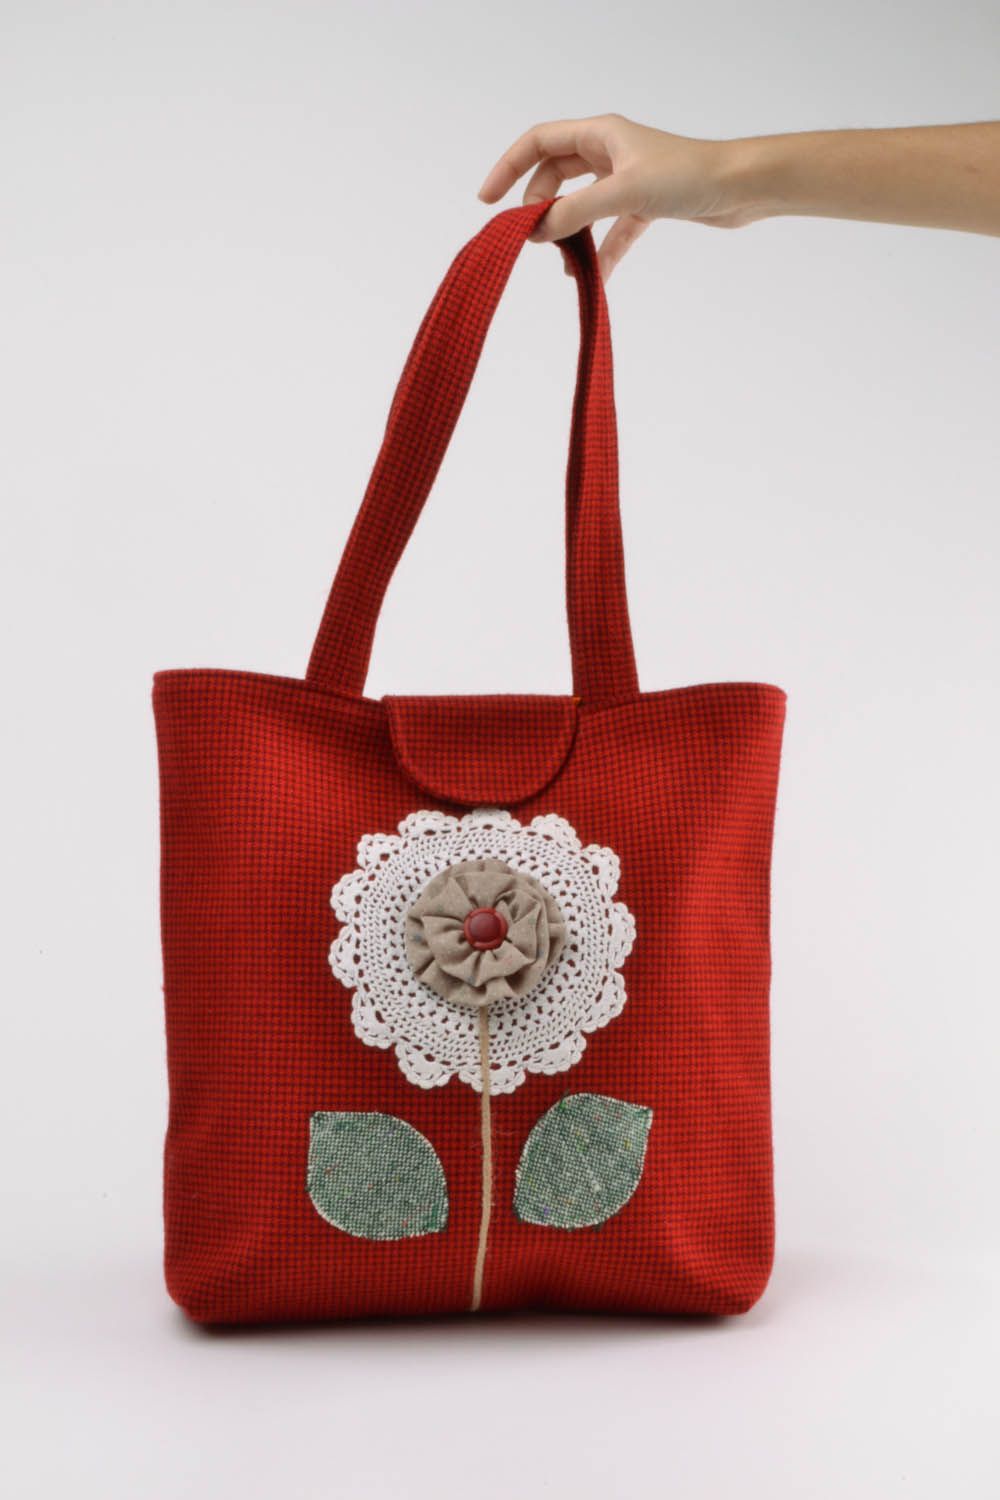 Тканевая сумка Винтажный цветок фото 3